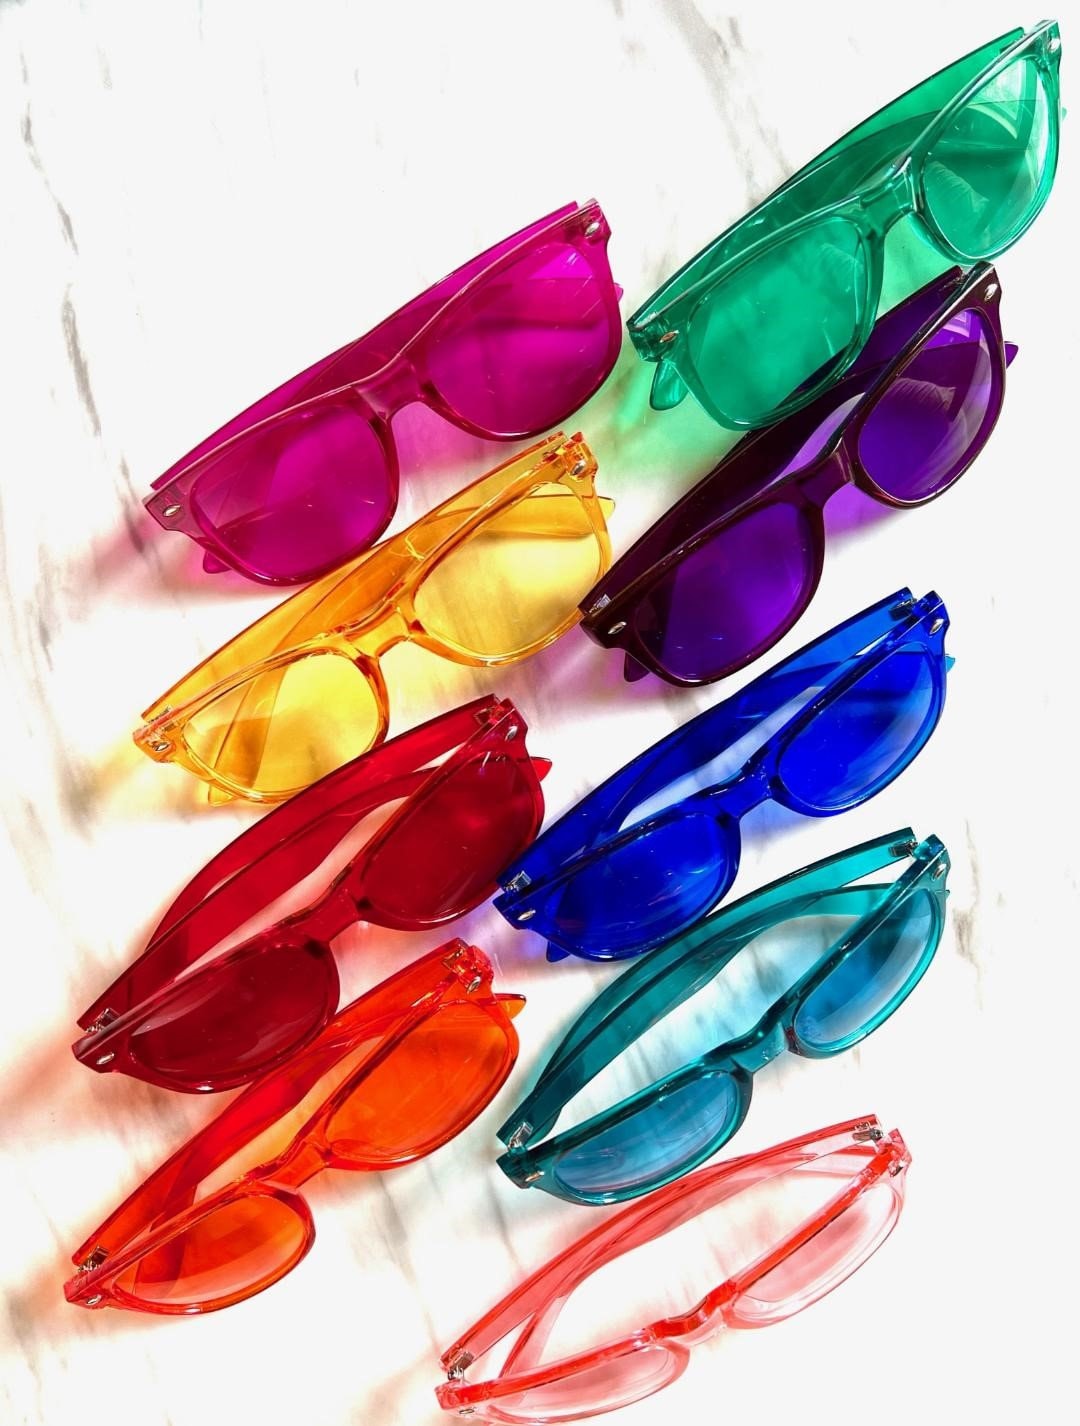 Sunglasses Lens Color Guide | Foster Grant-bdsngoinhaviet.com.vn